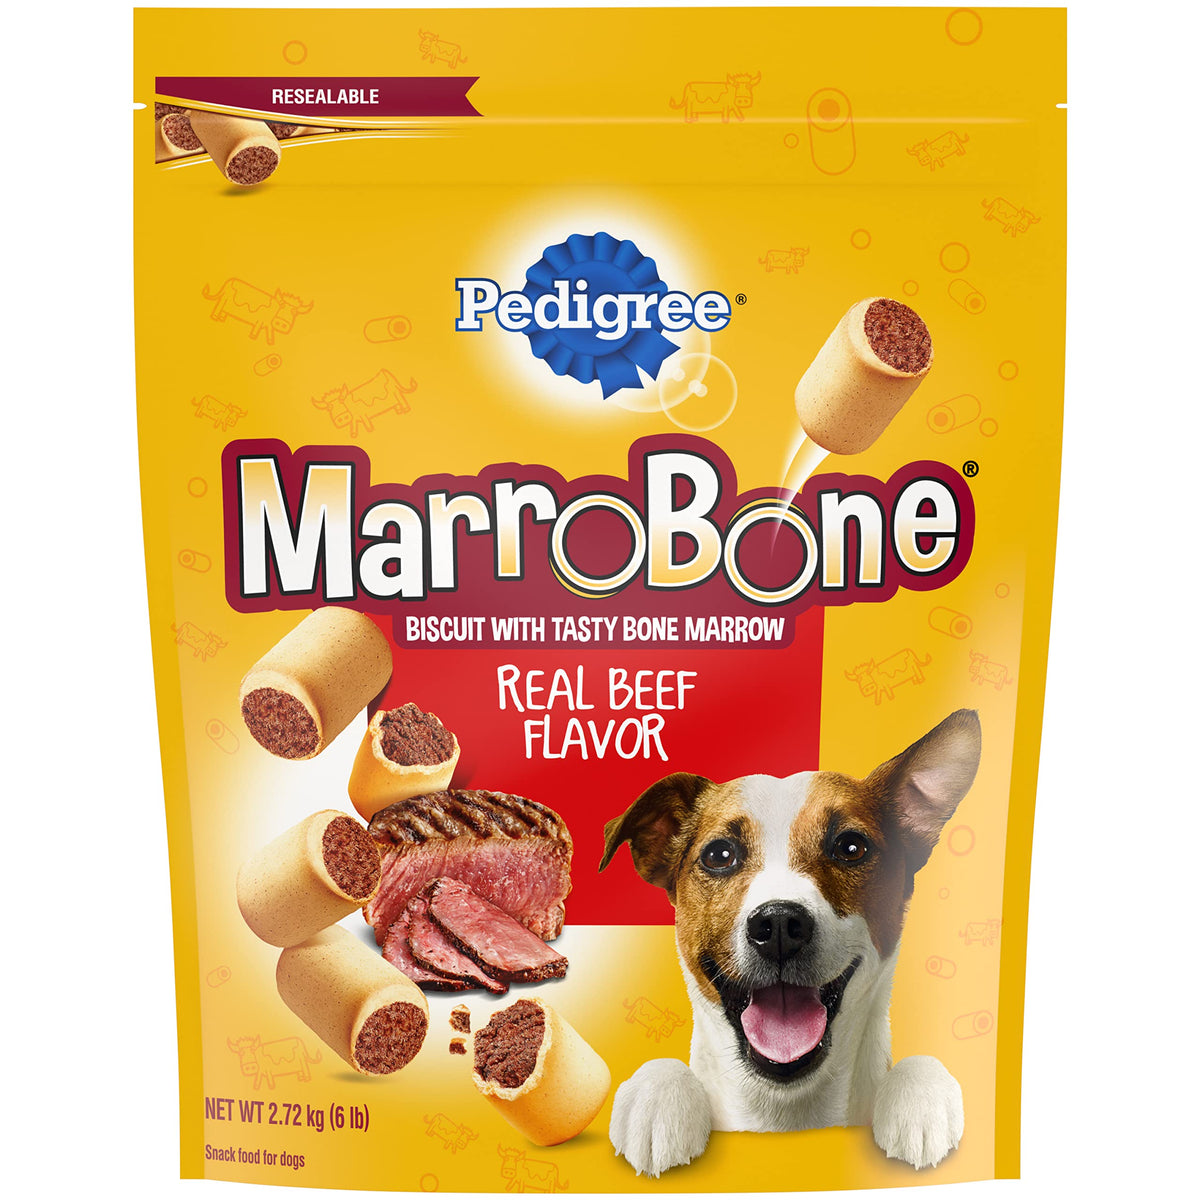 PEDIGREE MARROBONE Dog Treats Real Beef Flavor Crunchy Dog Biscuit, 6 lb. Pack